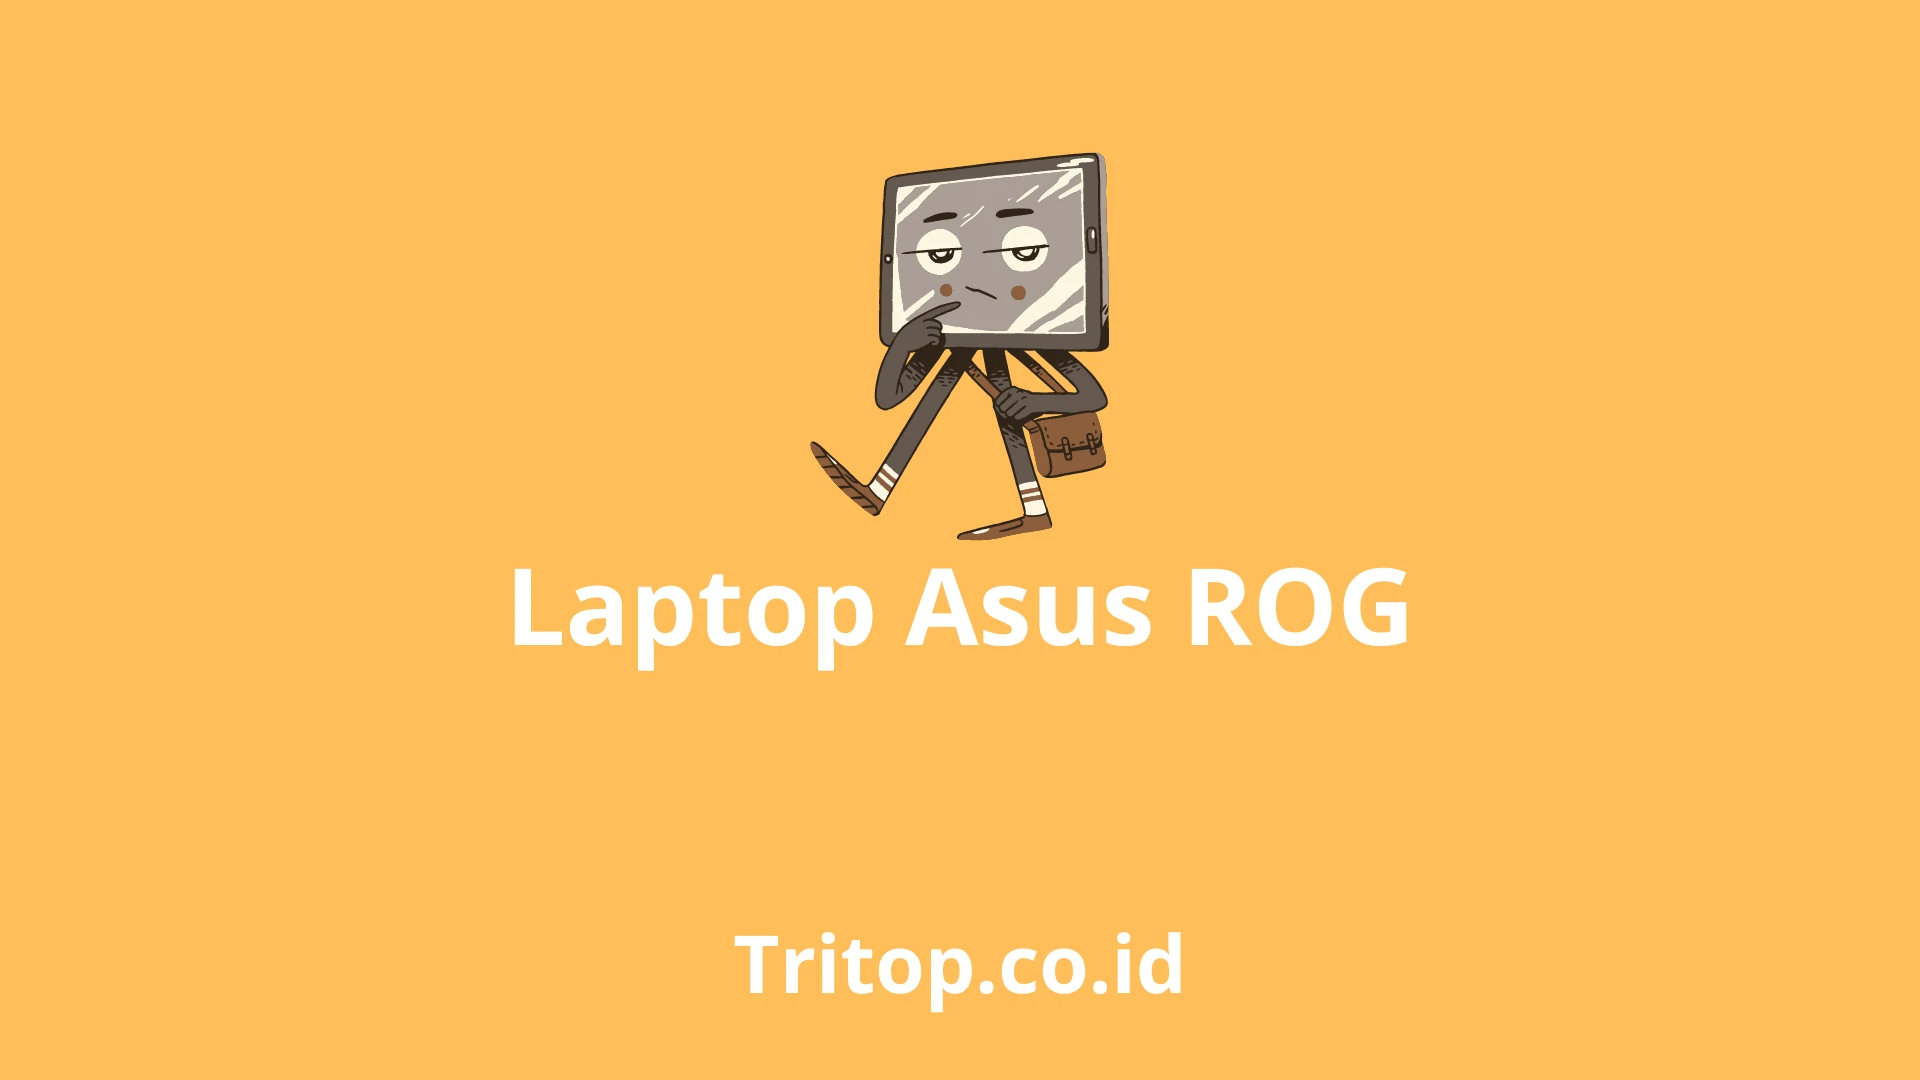 Laptop Asus ROG tritop.co.id